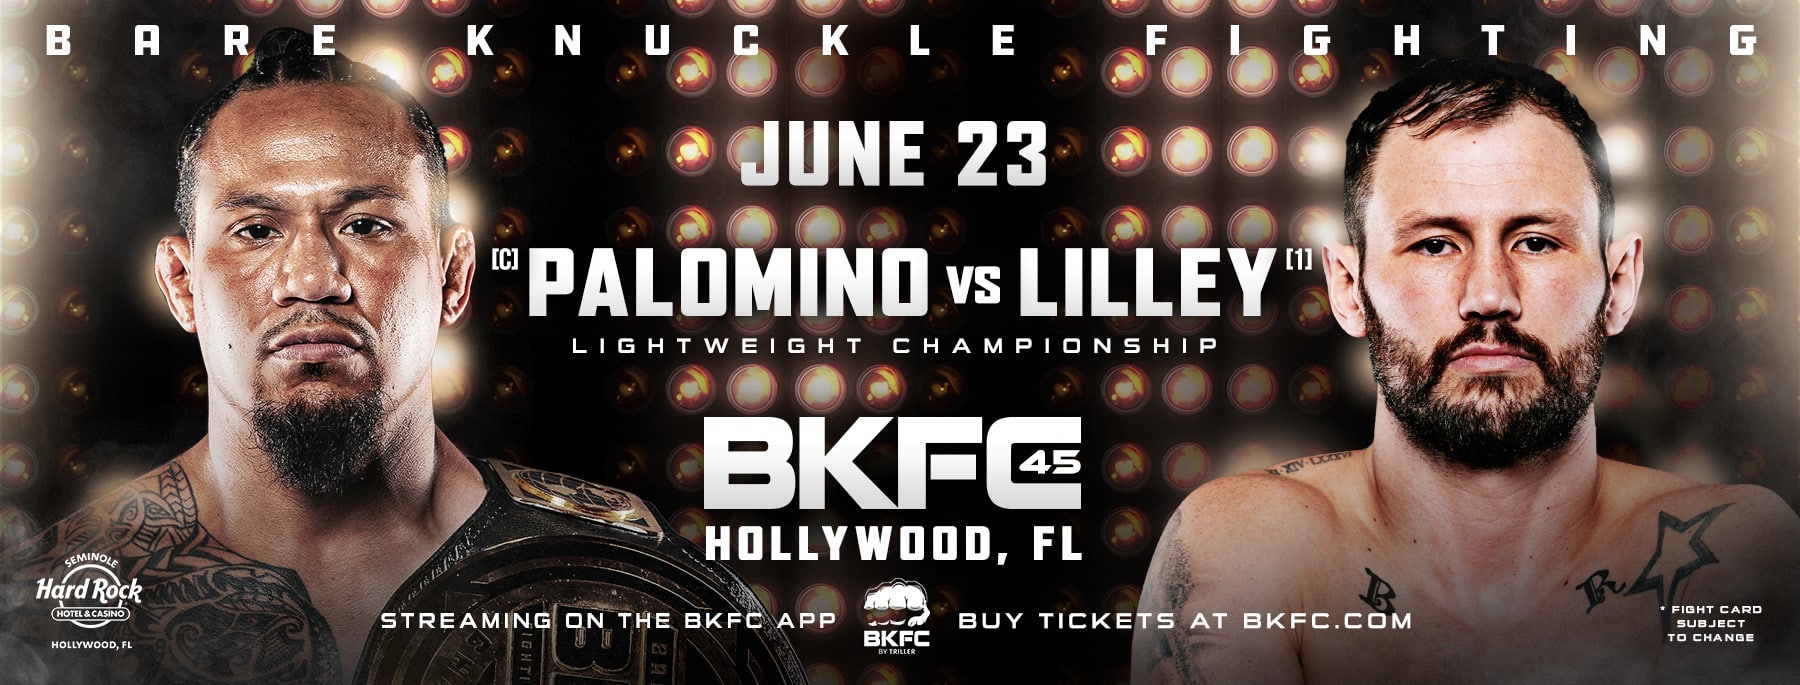 BKFC 45 Palomino vs Lilley Live Fight Thread